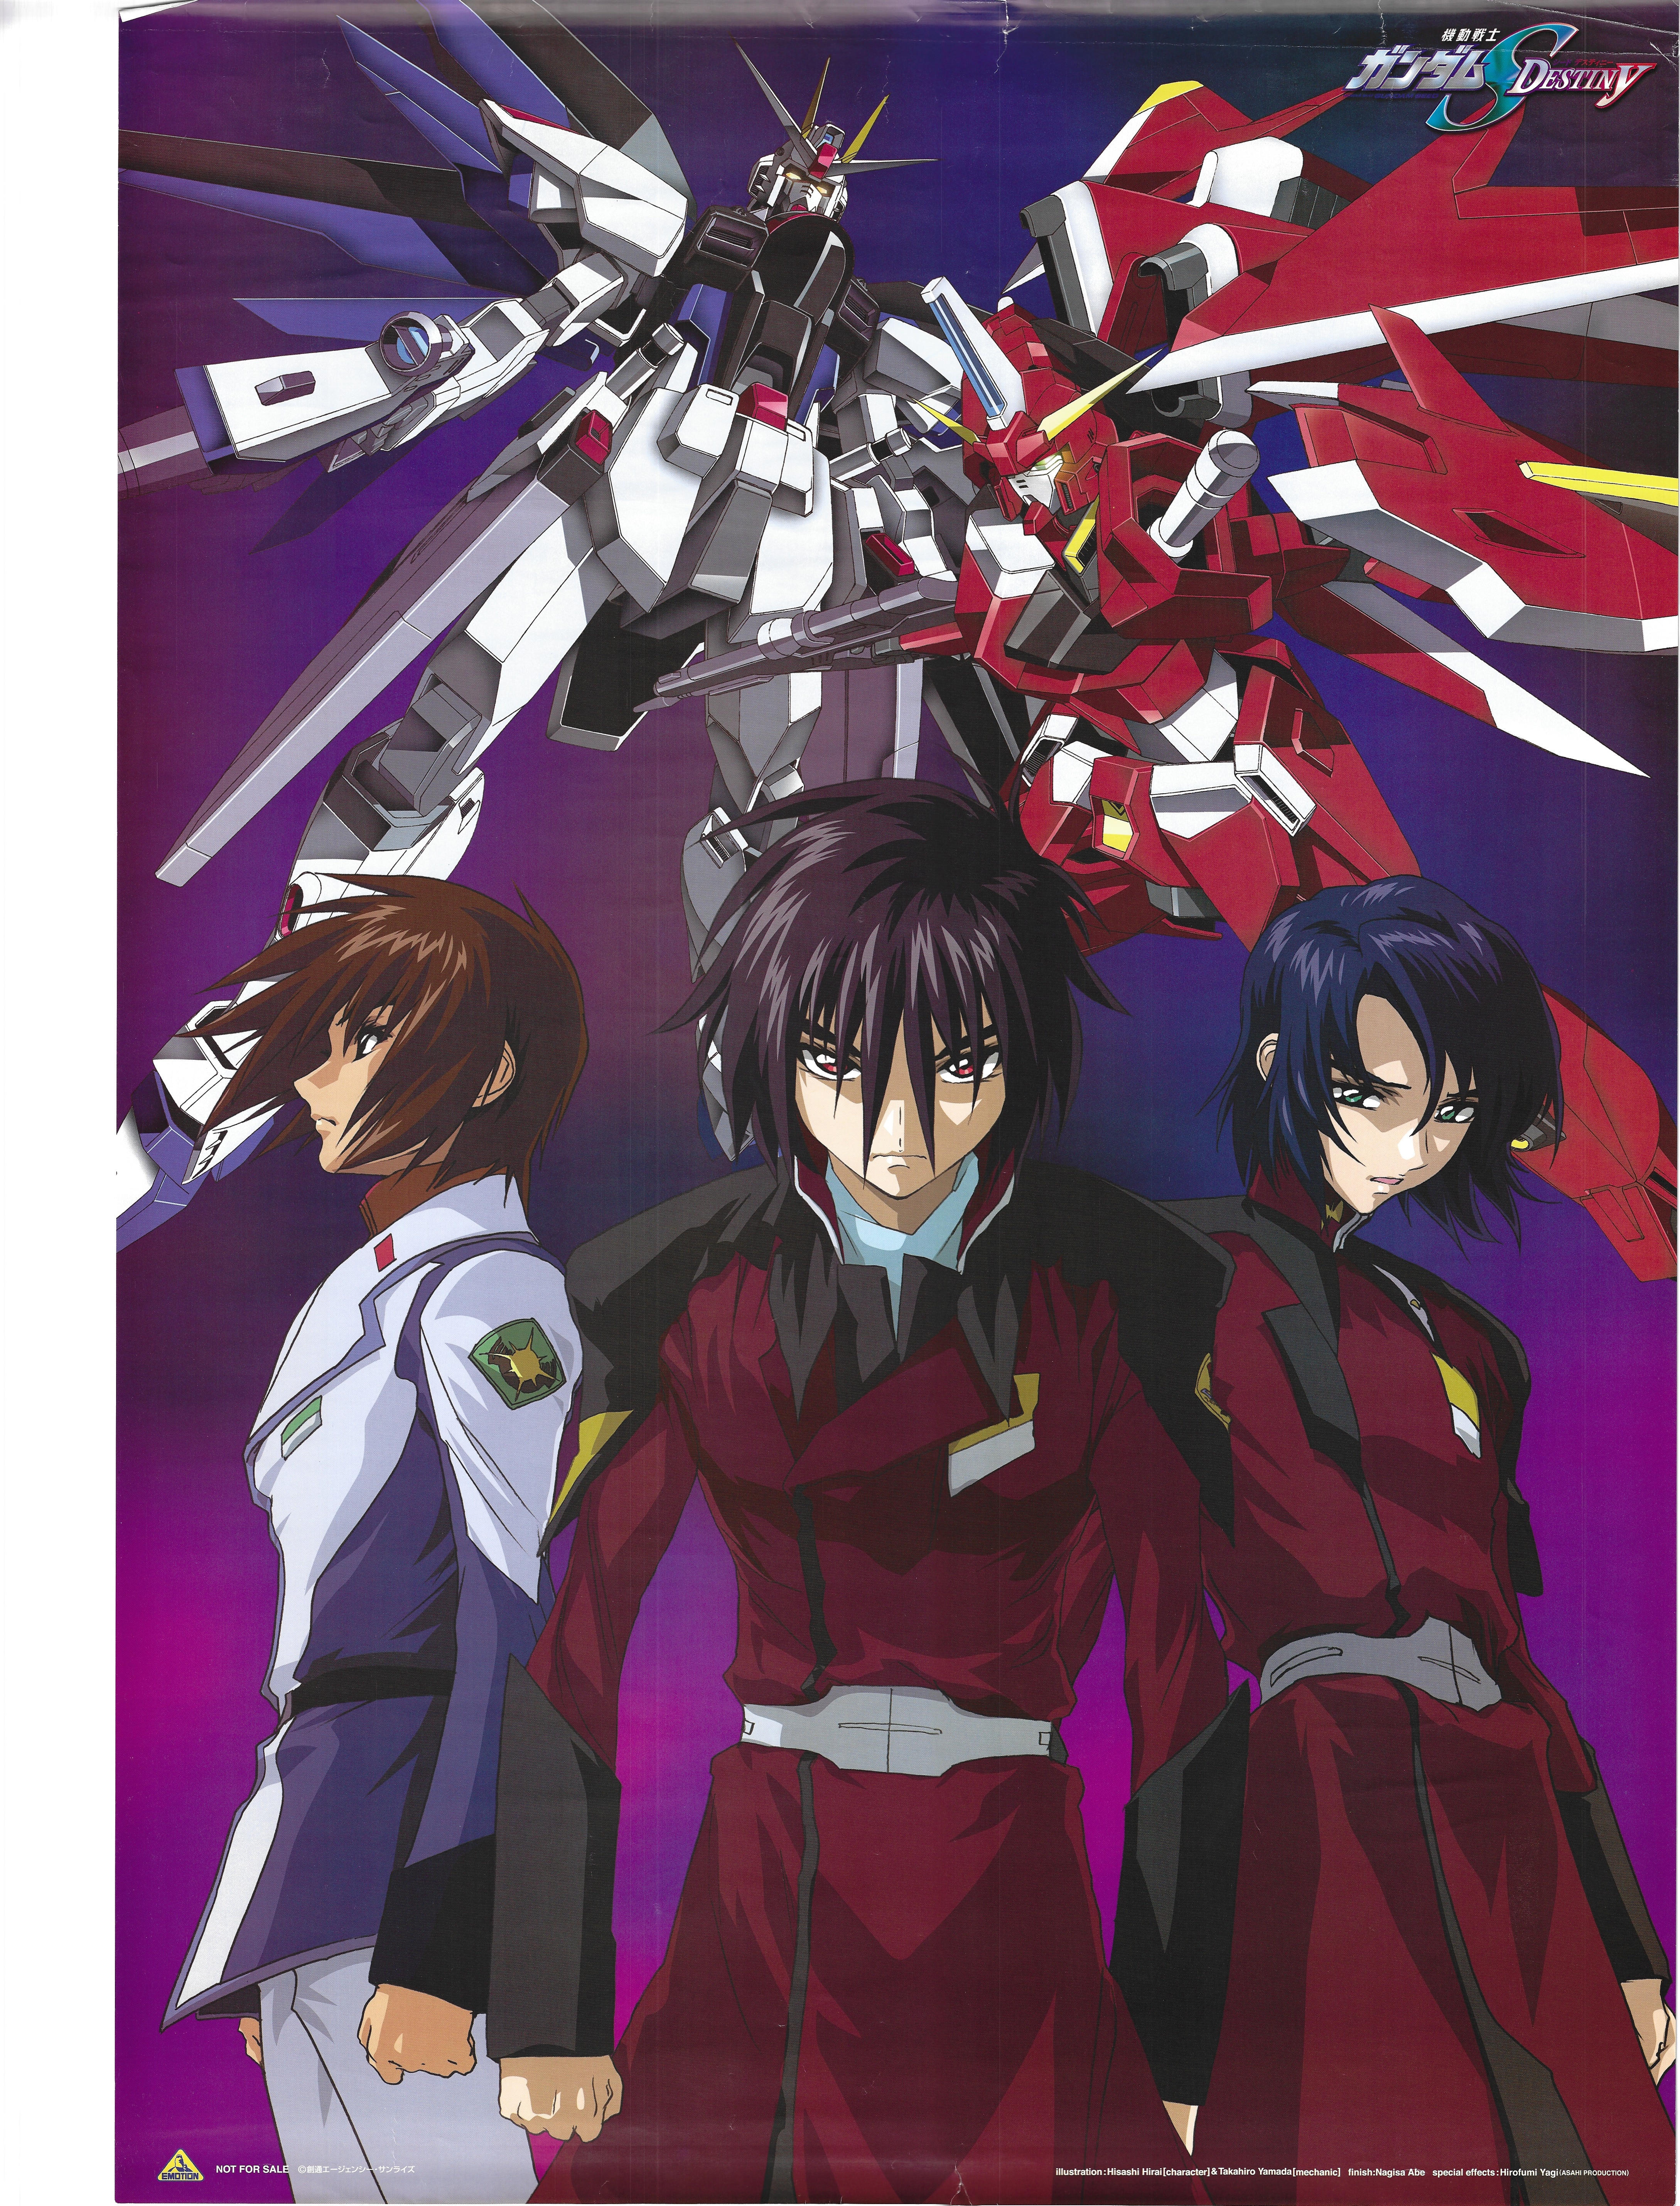 Announcement Item Mobile Suit Gundam Seed DESTINY B2 Poster